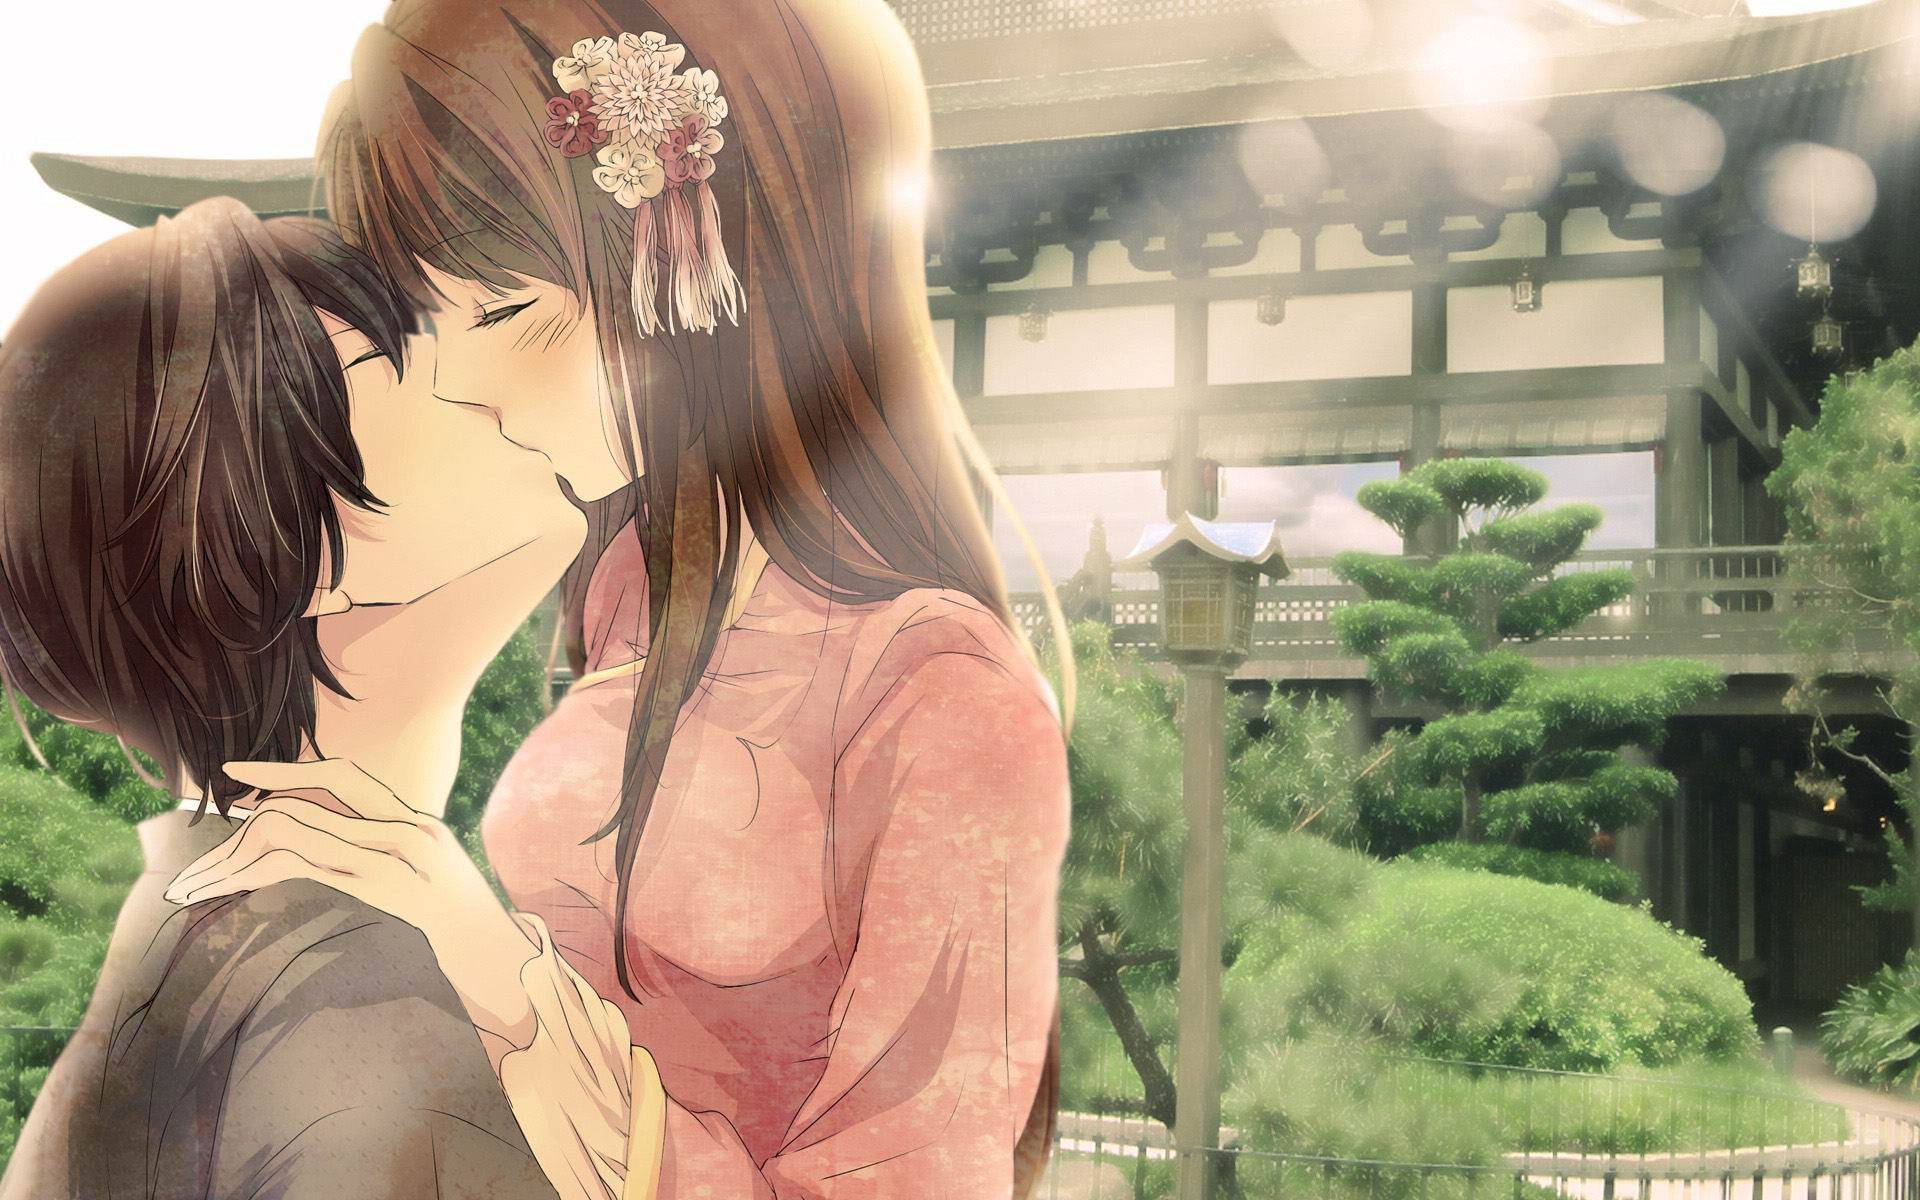 Anime kiss girl love valentines Day boy couple wallpaper, 2560x1600, 561603